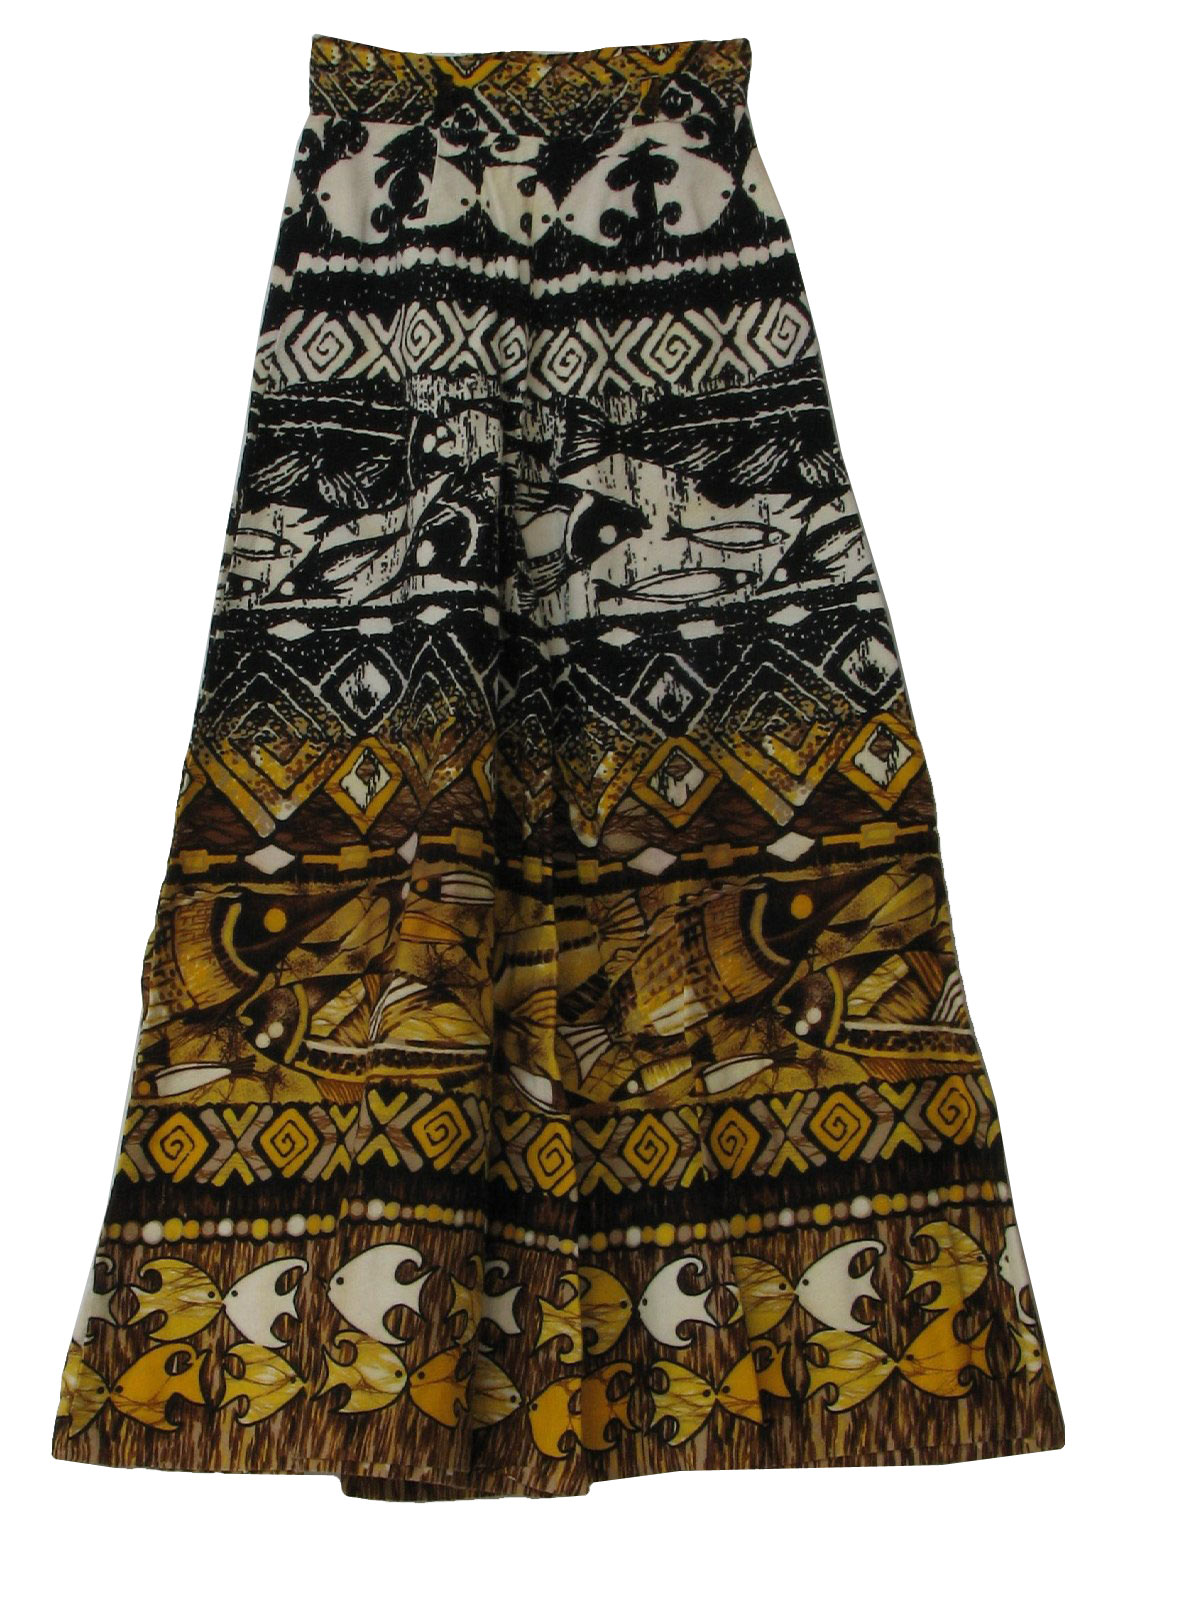 Retro 1970's Bellbottom Pants (home sewn) : 70s -home sewn- Womens